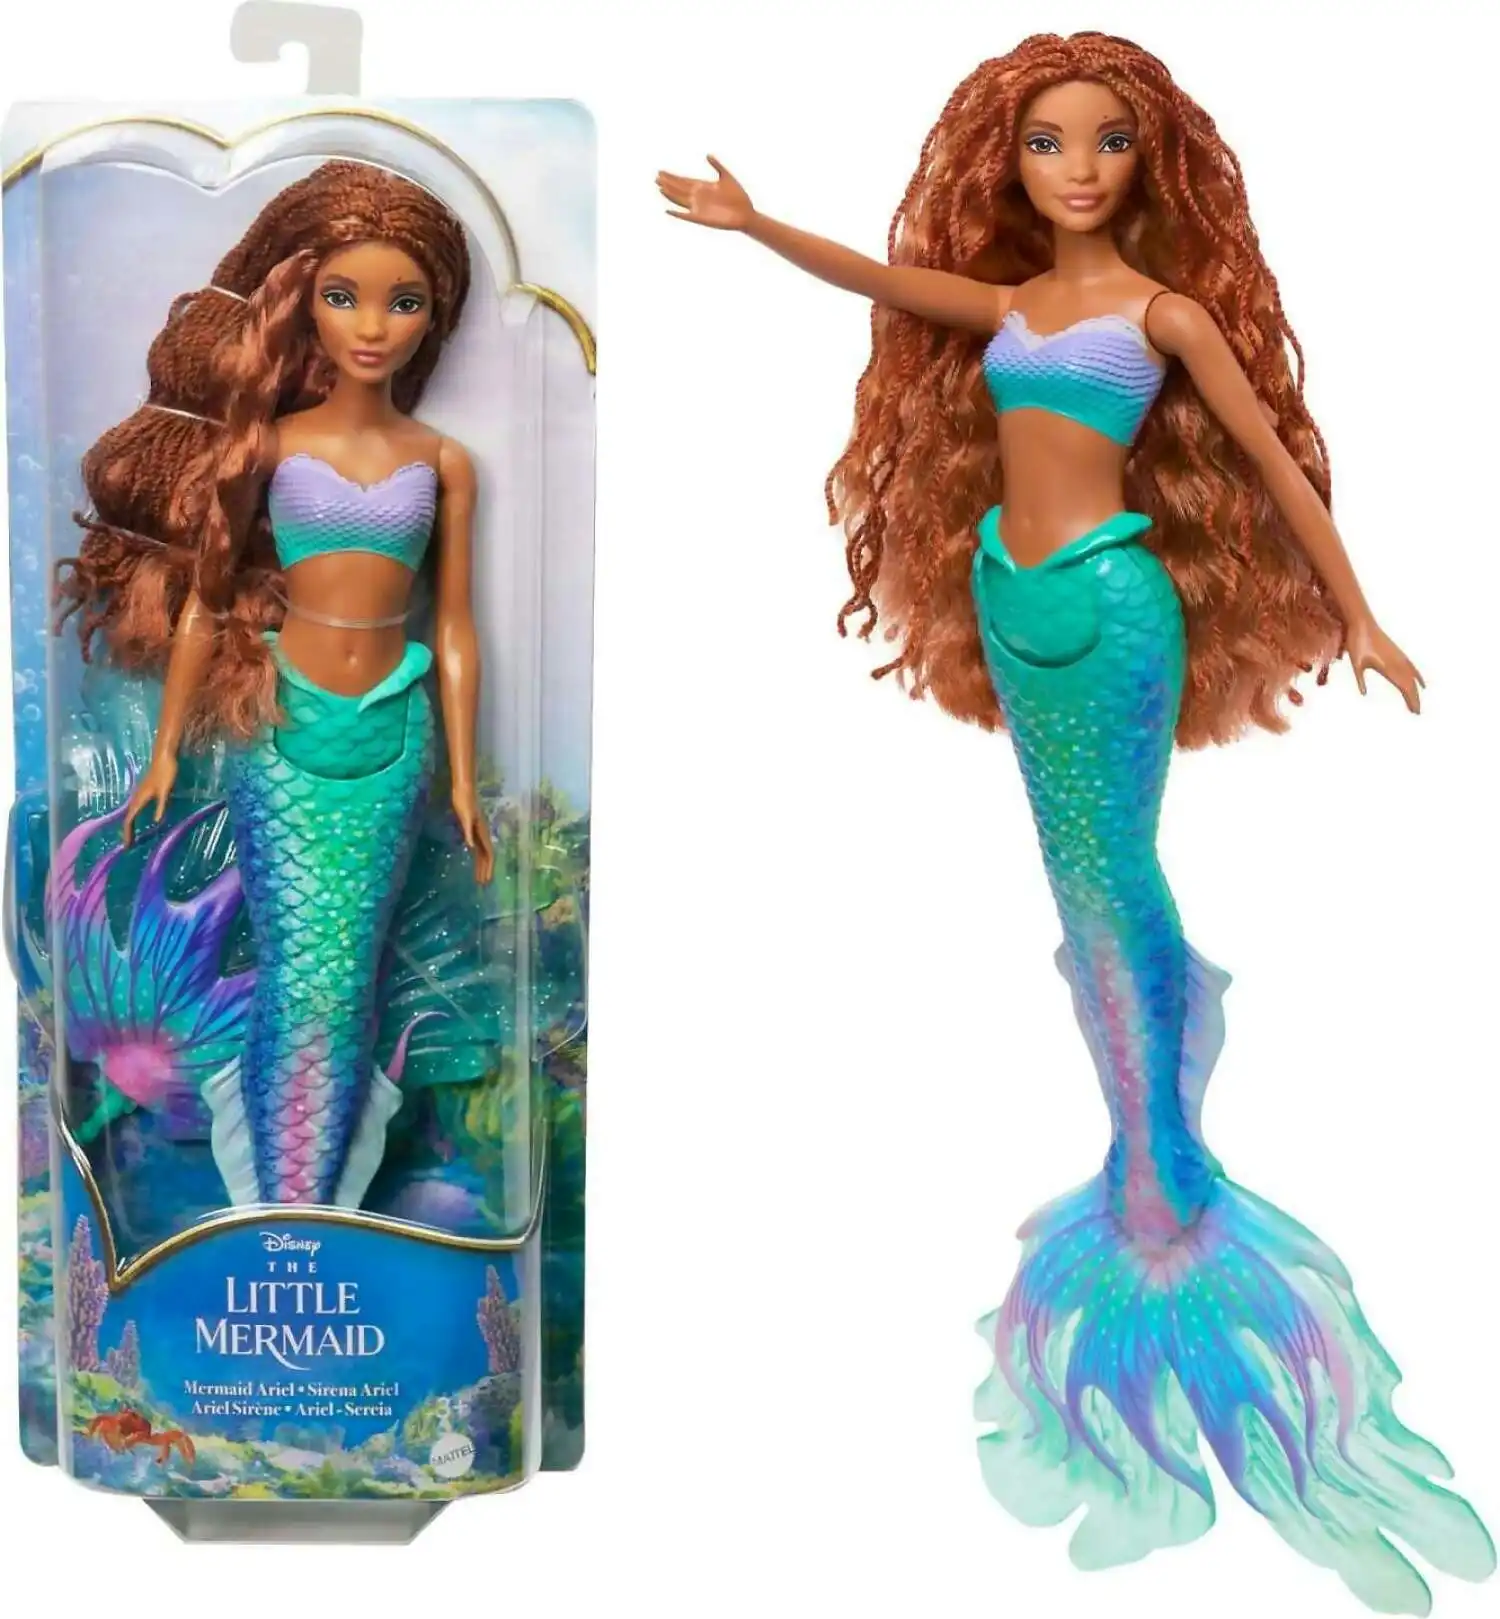 Disney - The Little Mermaid Ariel Doll Mermaid Fashion Doll Inspired By The Movie - Mattel